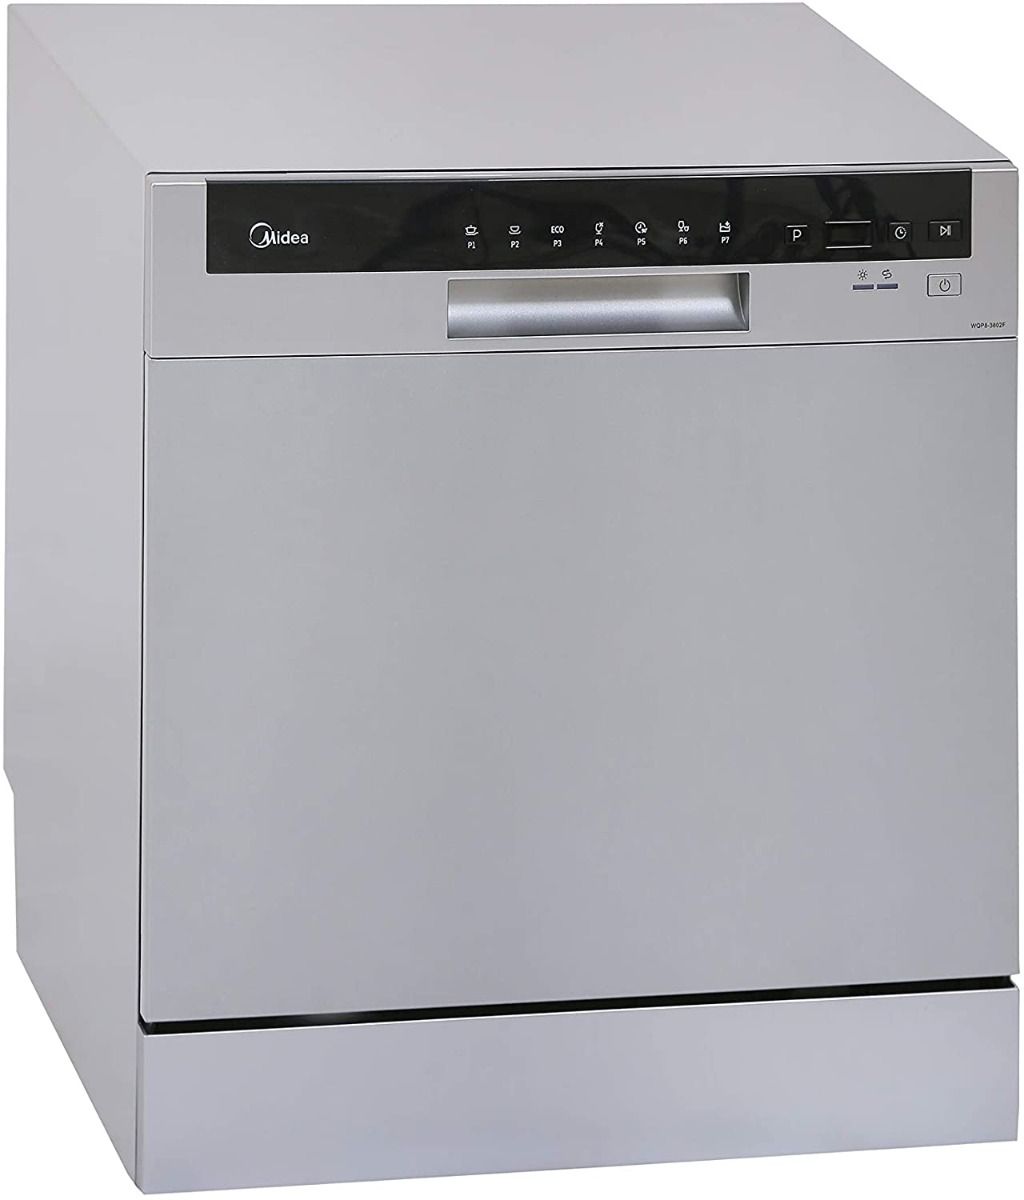 Midea WQP83802F Silver Color 8 Place Portable Dishwasher